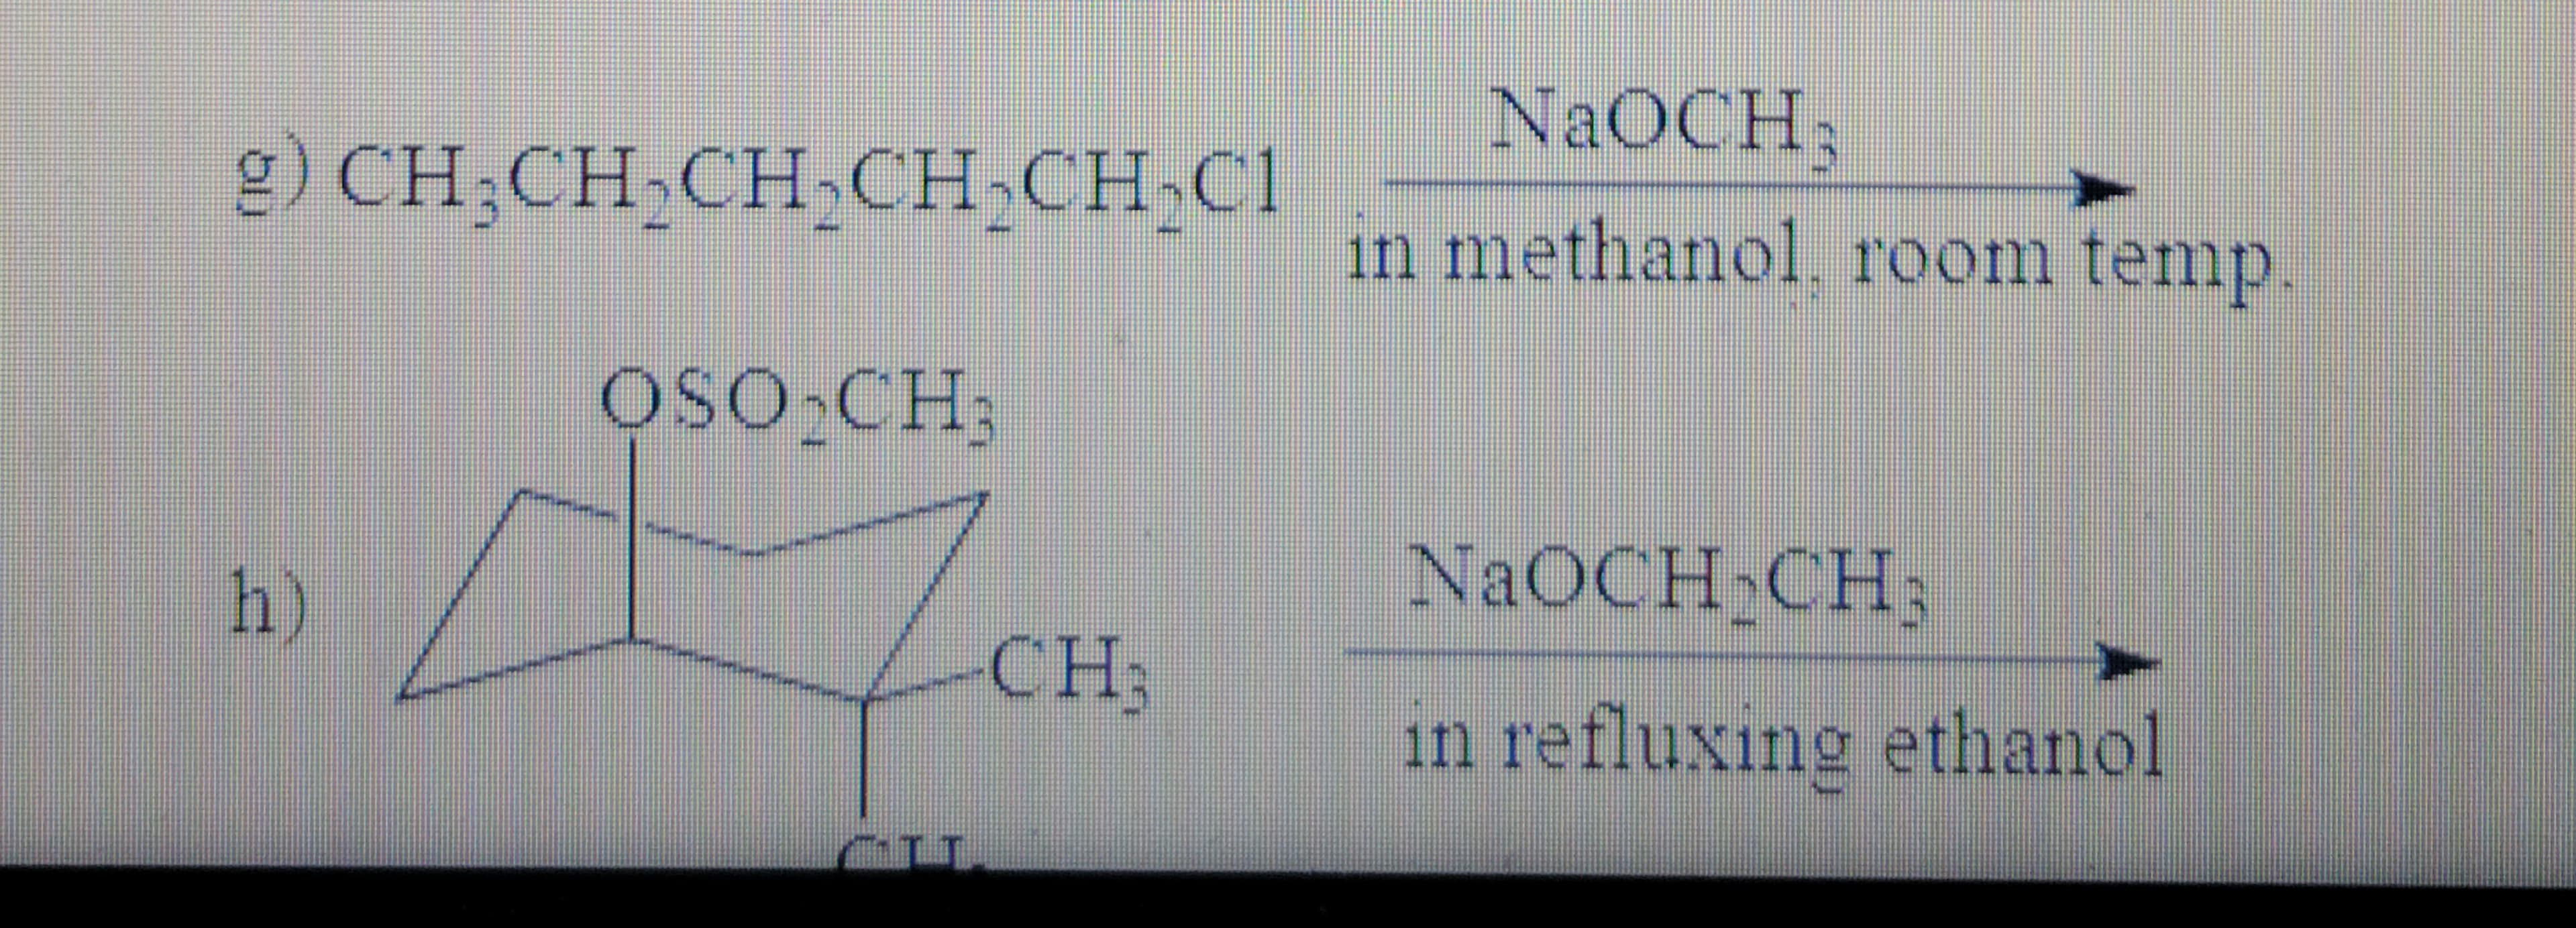 g) CH₂CH₂CH₂CH₂CH₂Cl
h)
OSO CH3
CH₂
NaOCH;
in methanol, room temp.
NaOCH₂CH₂
in refluxing ethanol